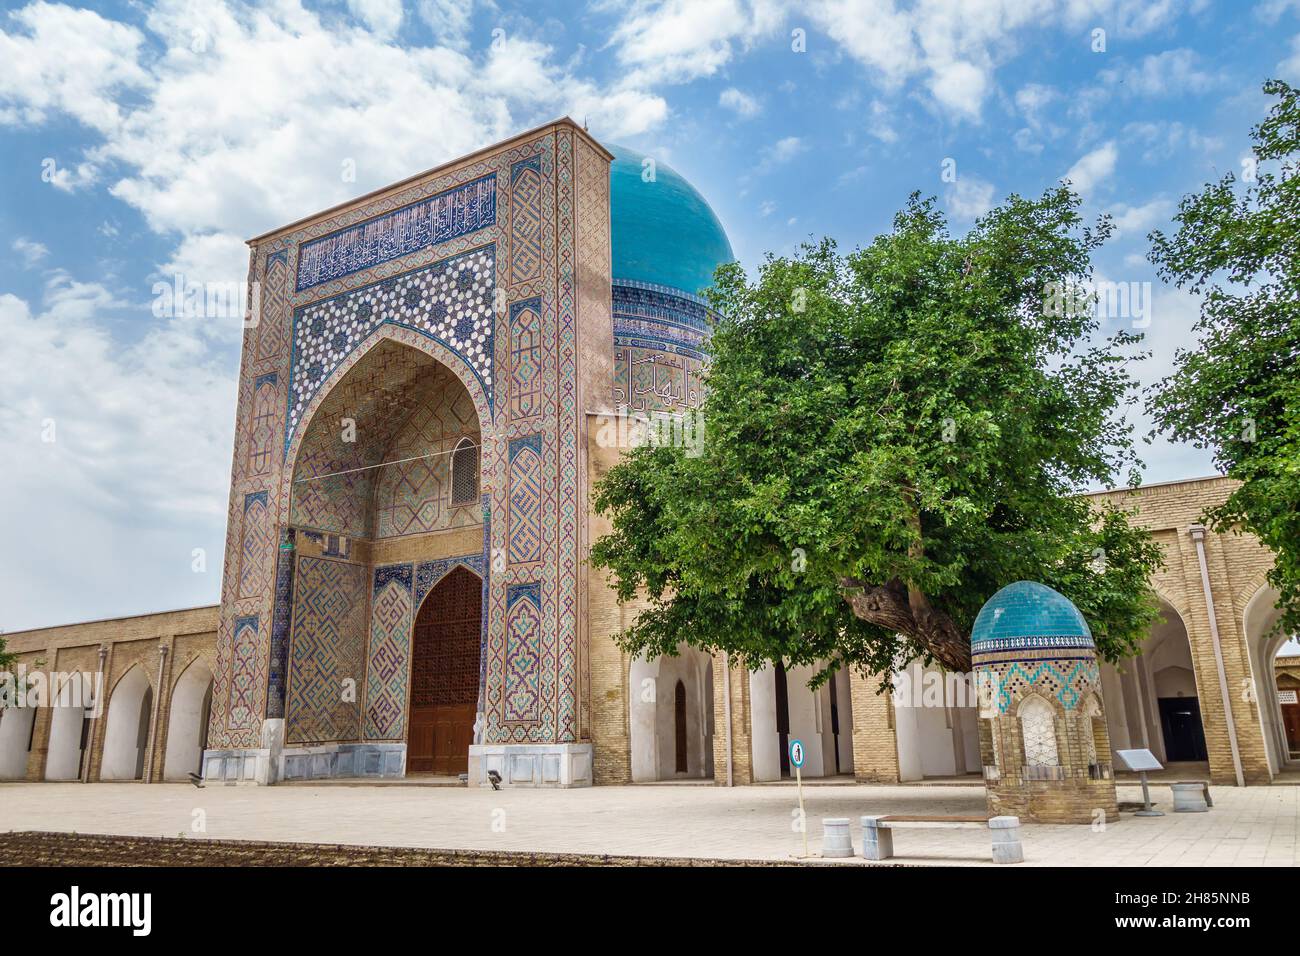 Facade of Kok-Gumbaz mosque or Blue Dome in translation, Shakhrisabz, Uzbekistan. It is part of architectural historical complex Dorut Tilavat, founde Stock Photo